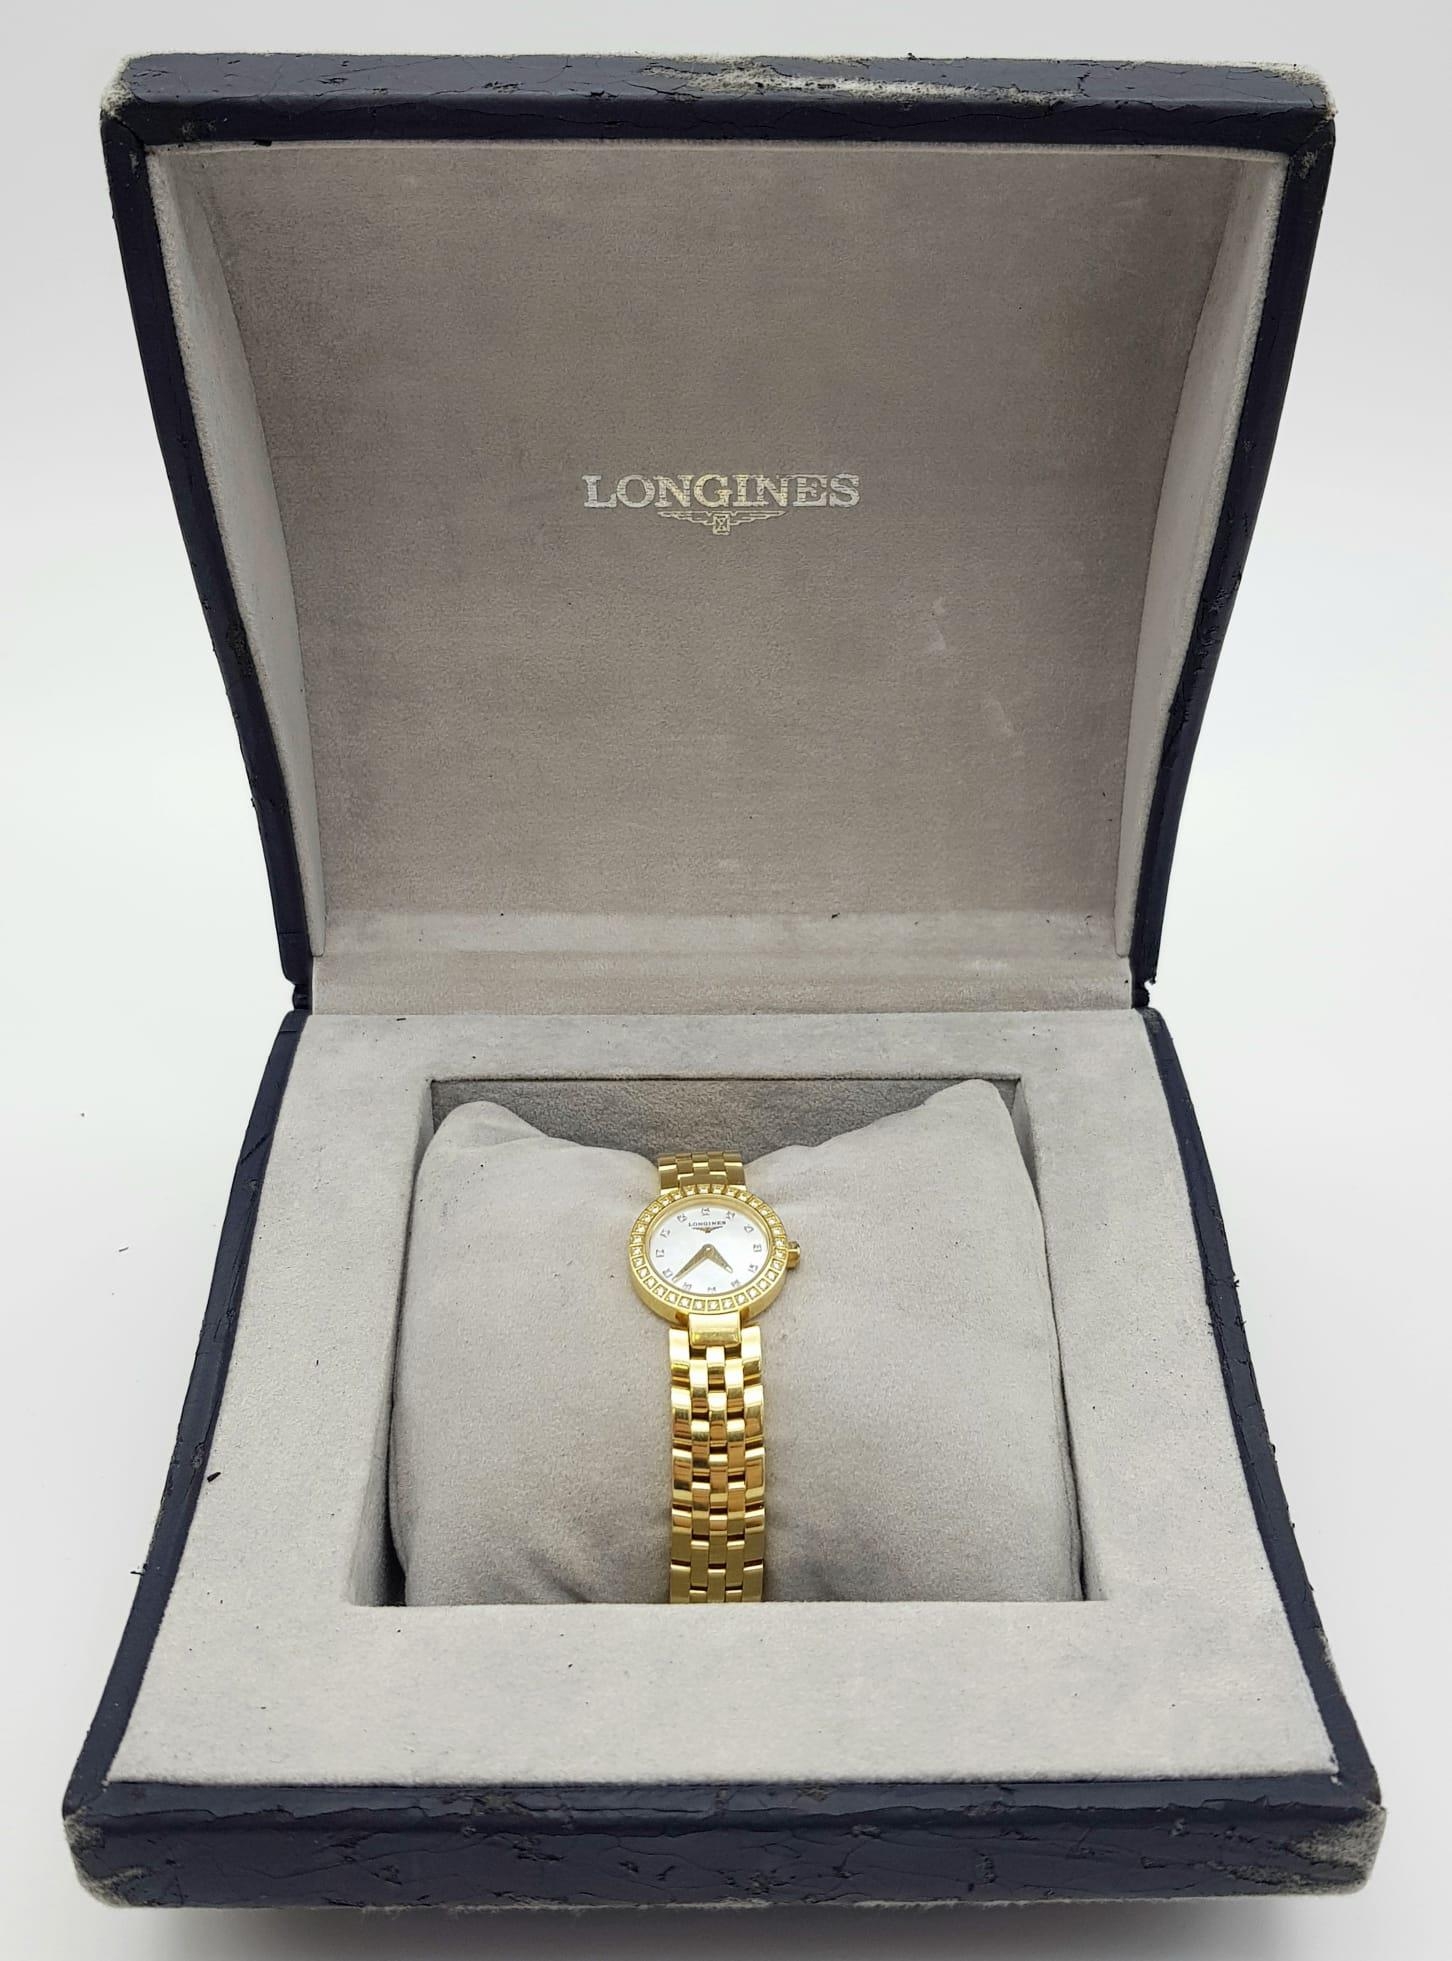 Longine ladies watch 18k diamond watch in original box and certificate. 54.3 grams. 19mm. - Image 3 of 7